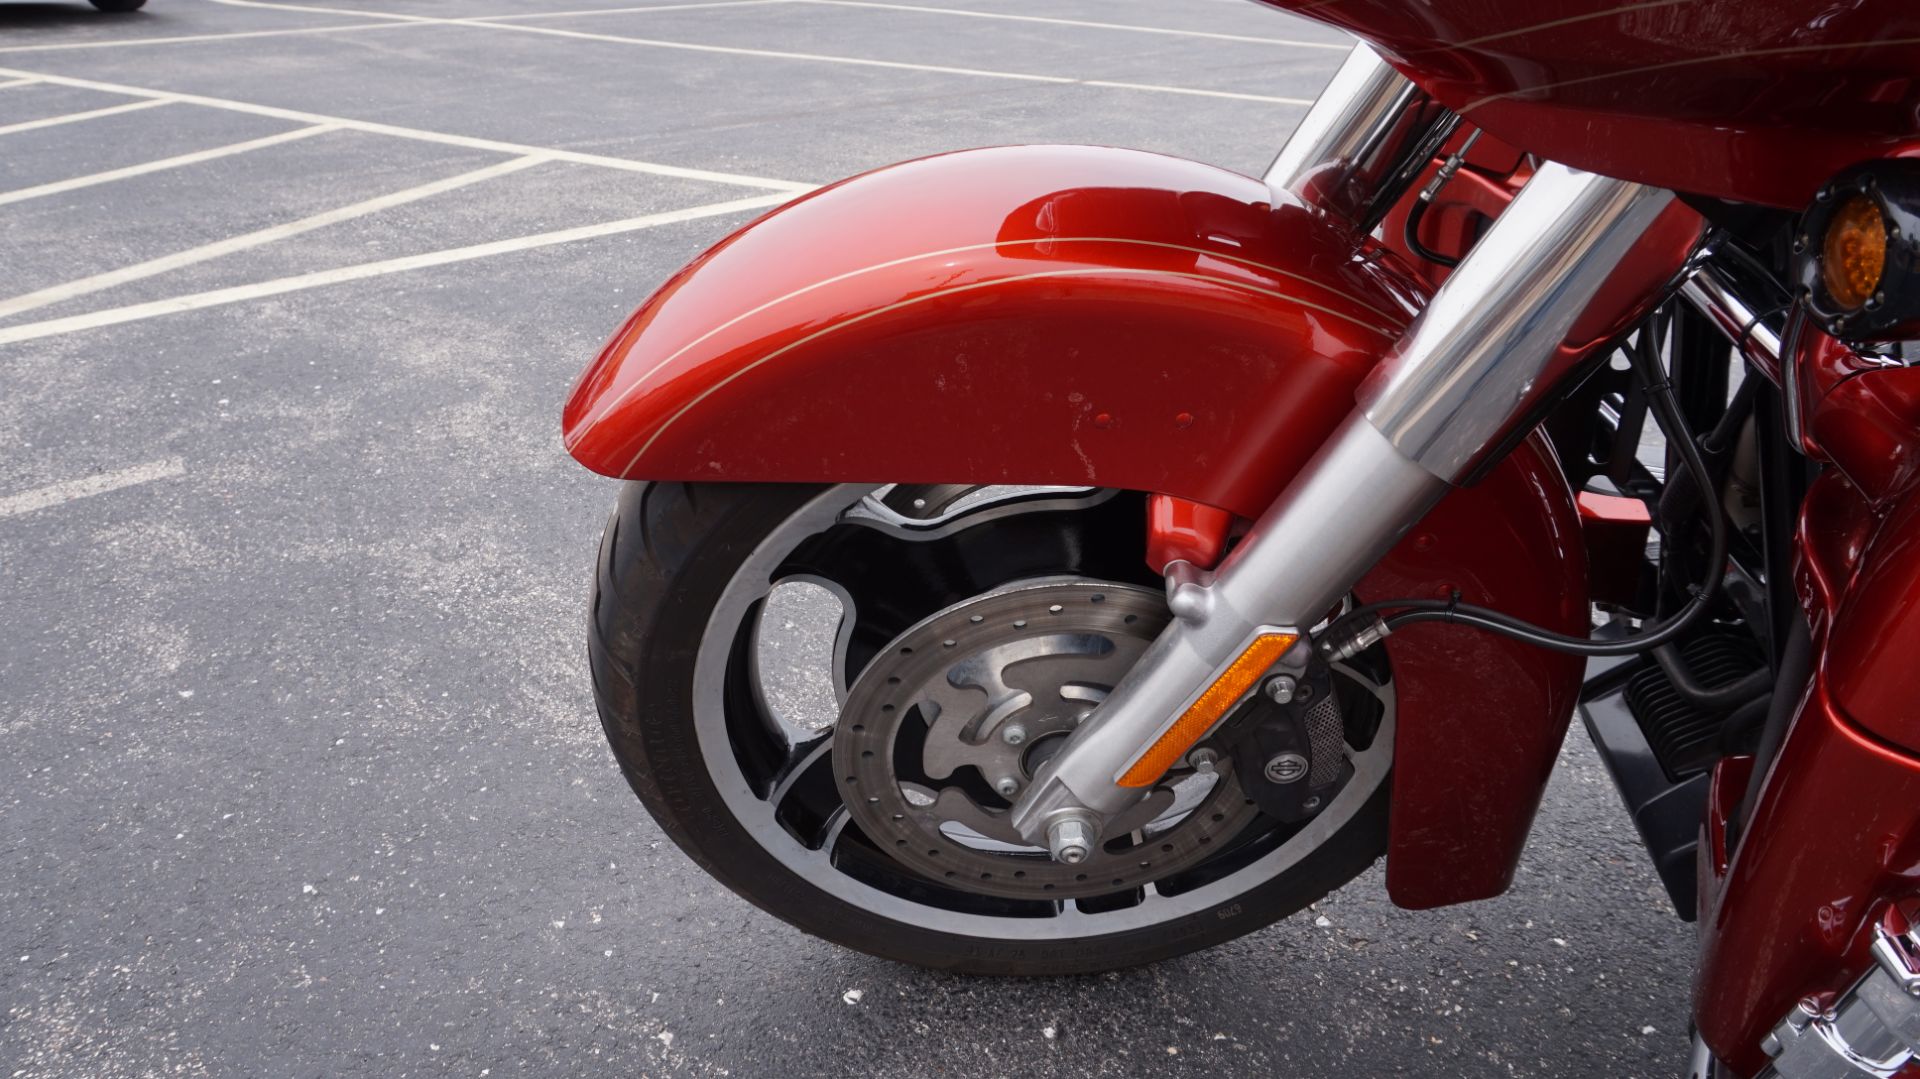 2013 Harley-Davidson Road Glide® Custom in Racine, Wisconsin - Photo 37